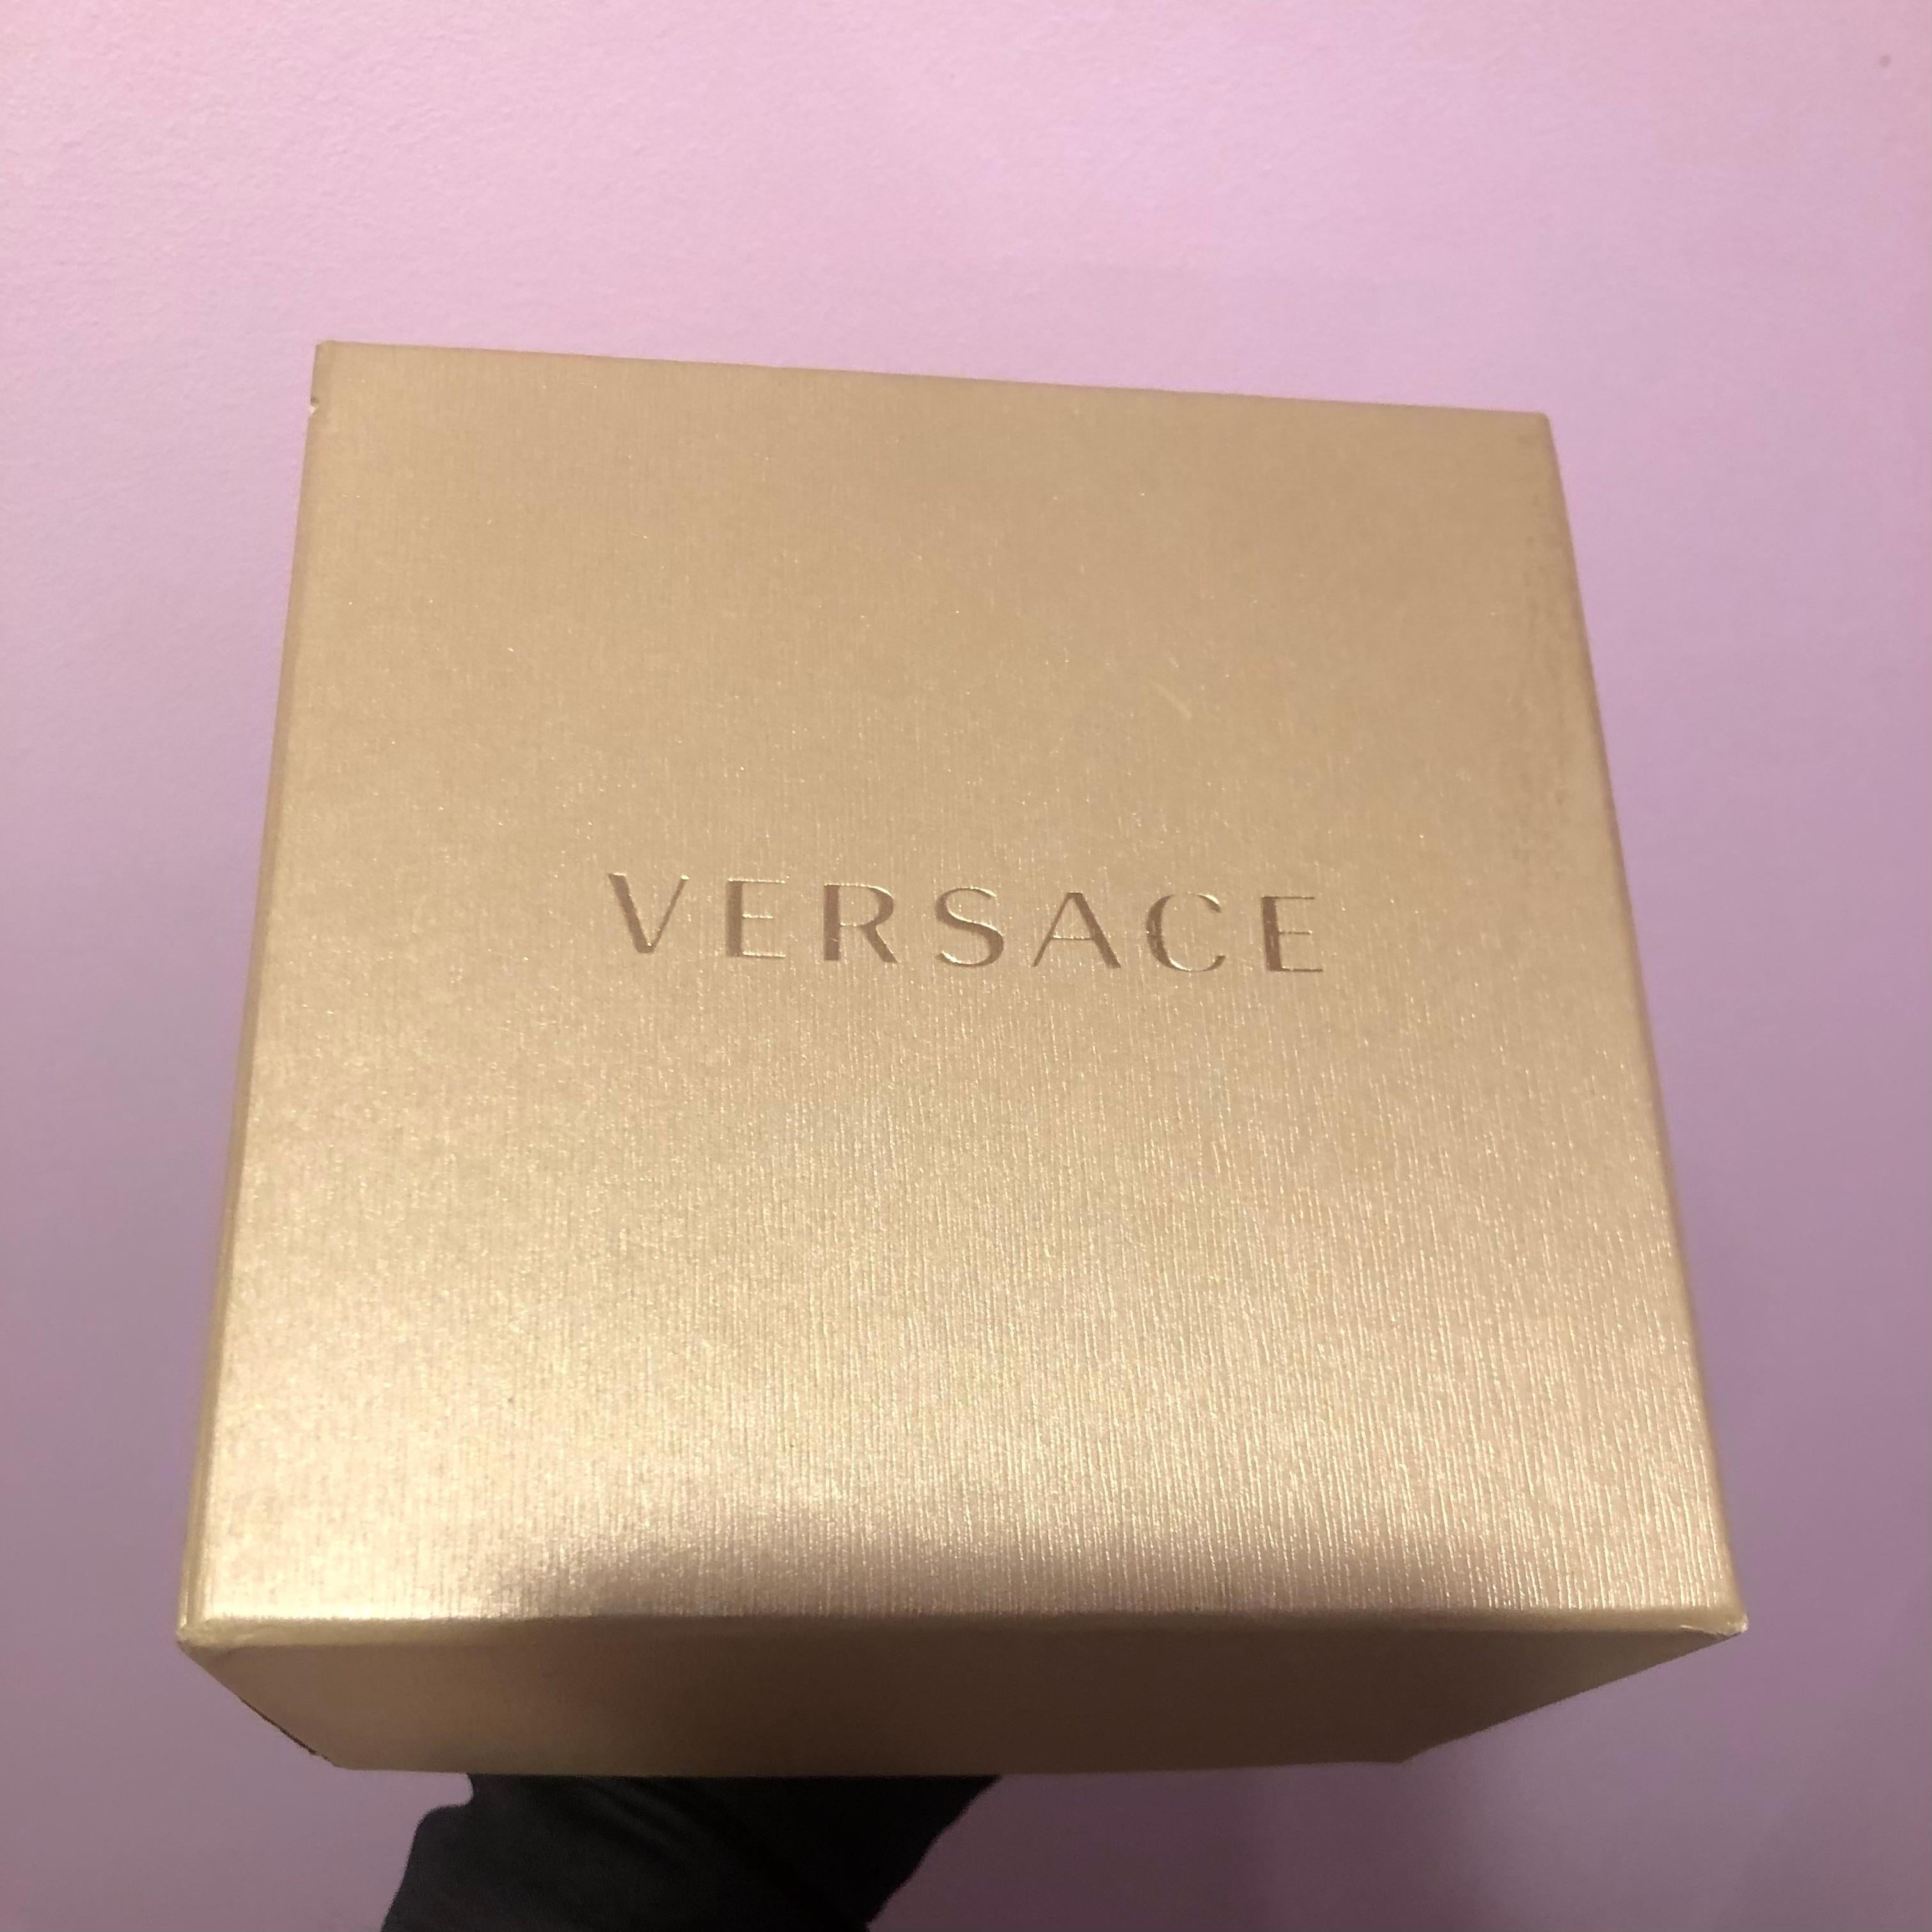 Versace Men’s 42mm Watch with Custom Diamond Iced Bezel For Sale 1